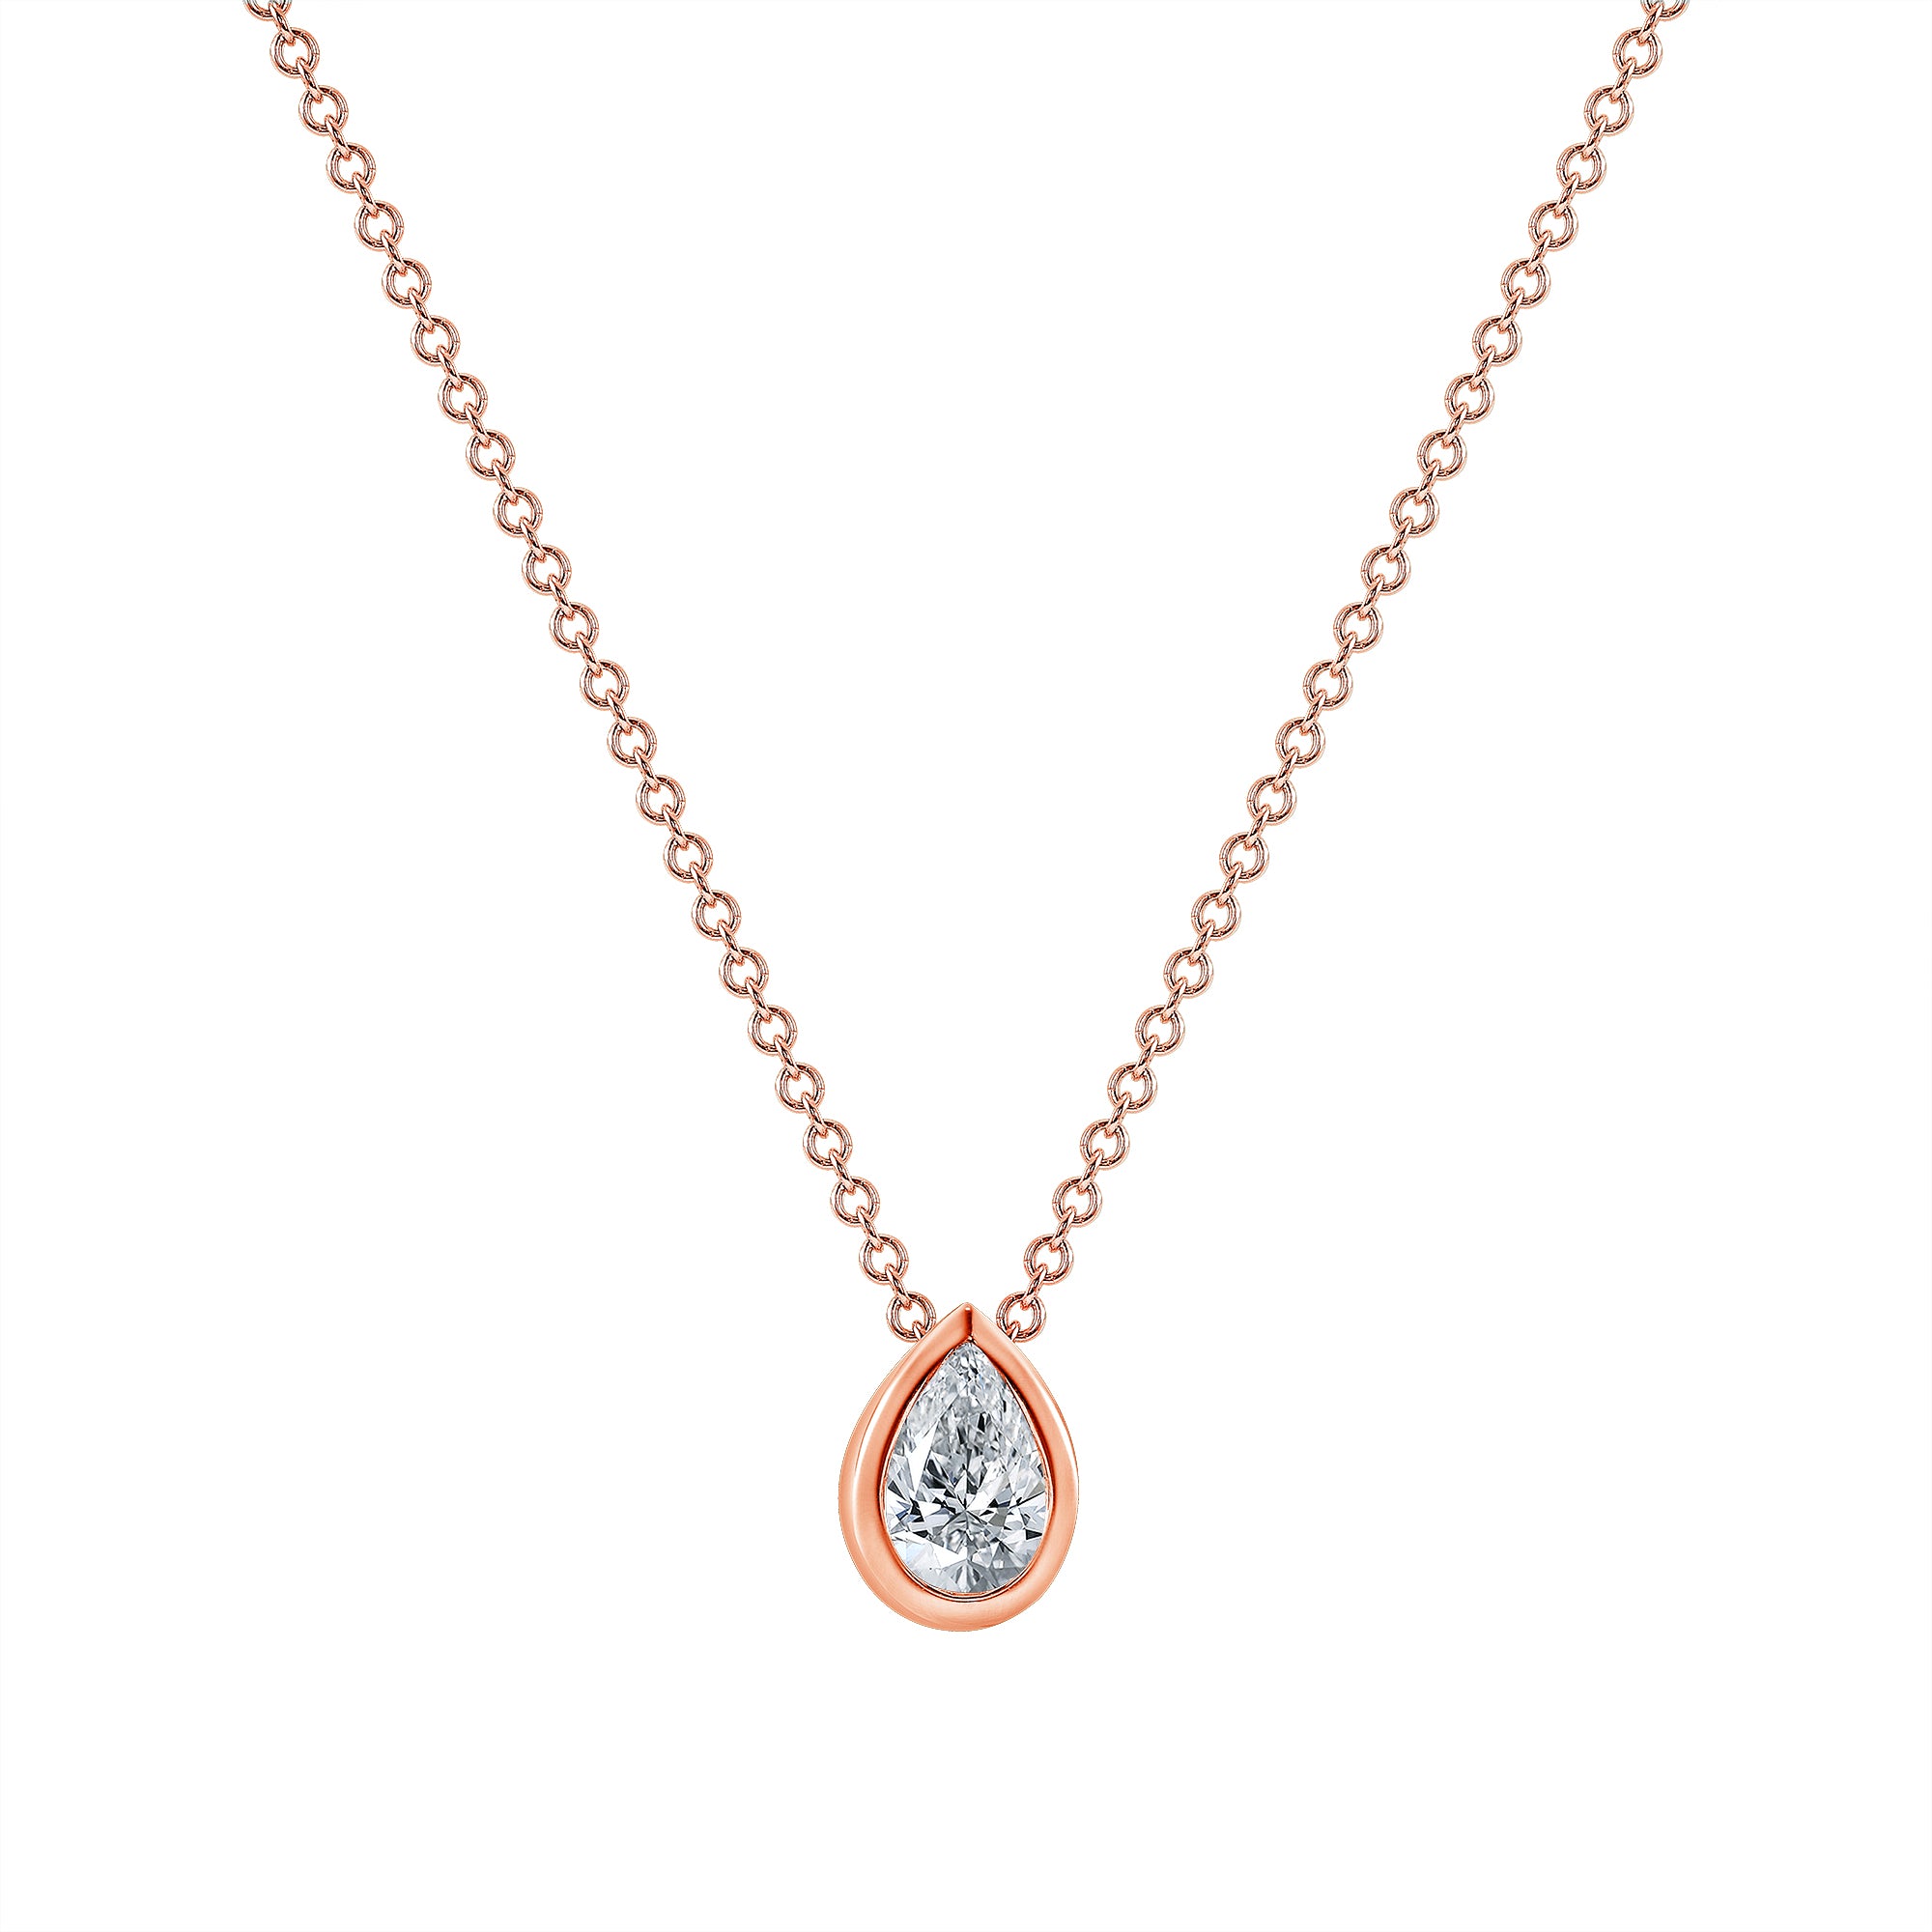 Haloed Pear Shaped Cubic Zirconia Pendant Necklace | David's Bridal